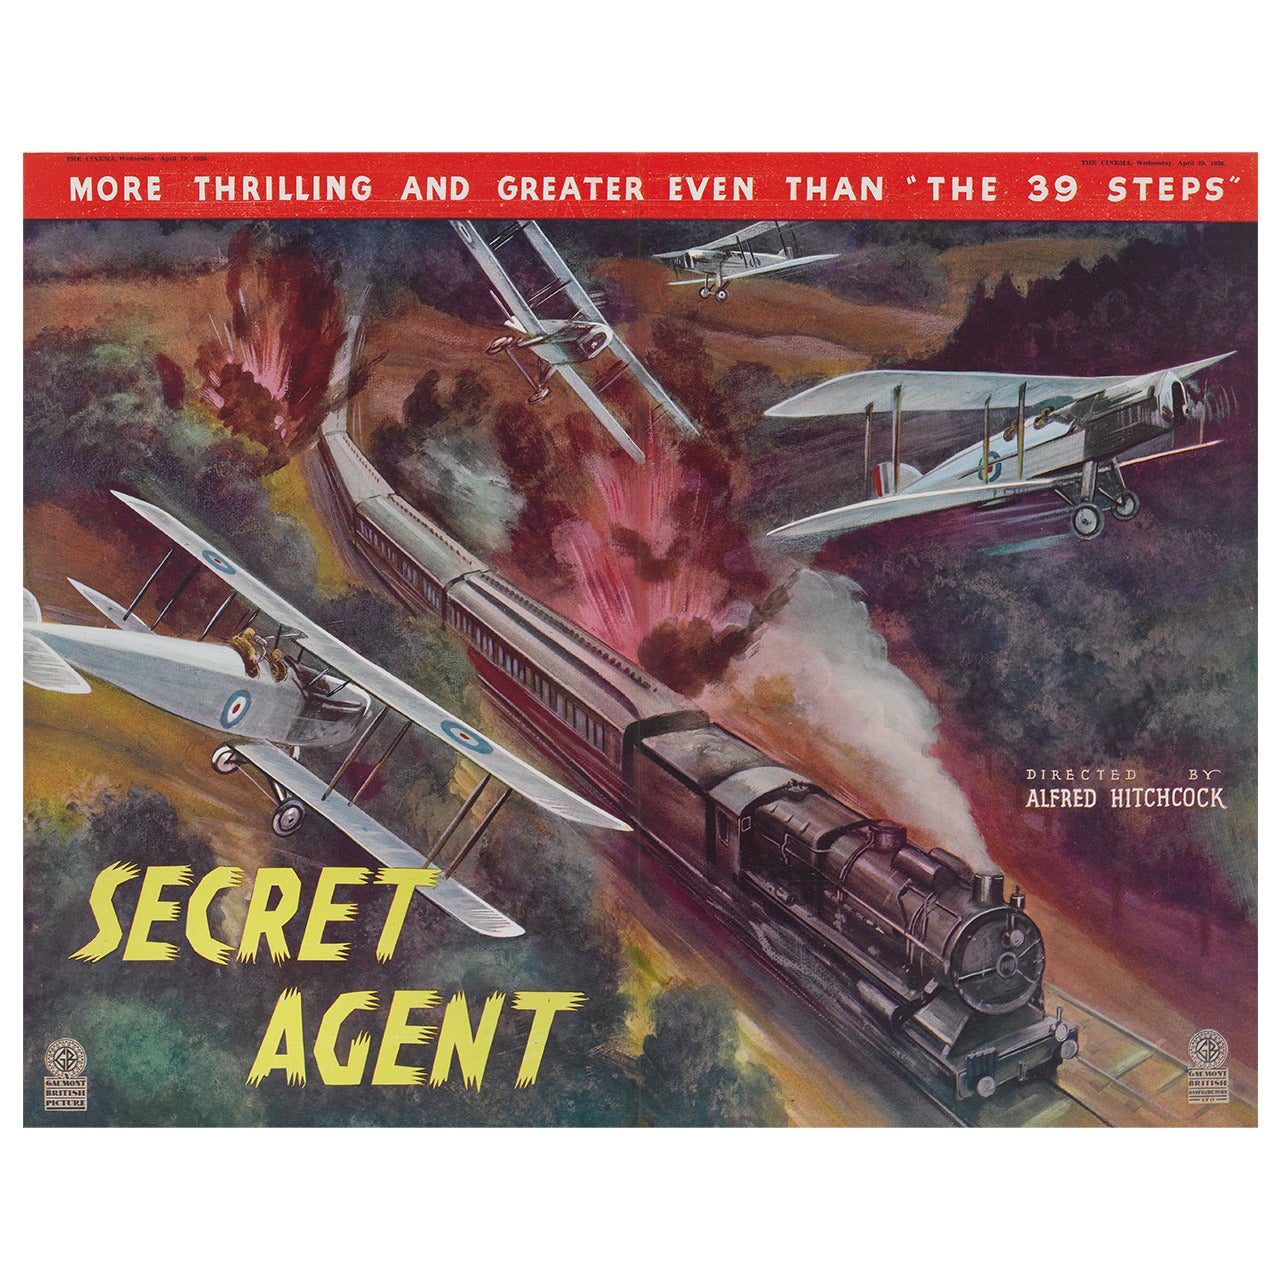 "Secret Agent" Original British Advertisment Poster